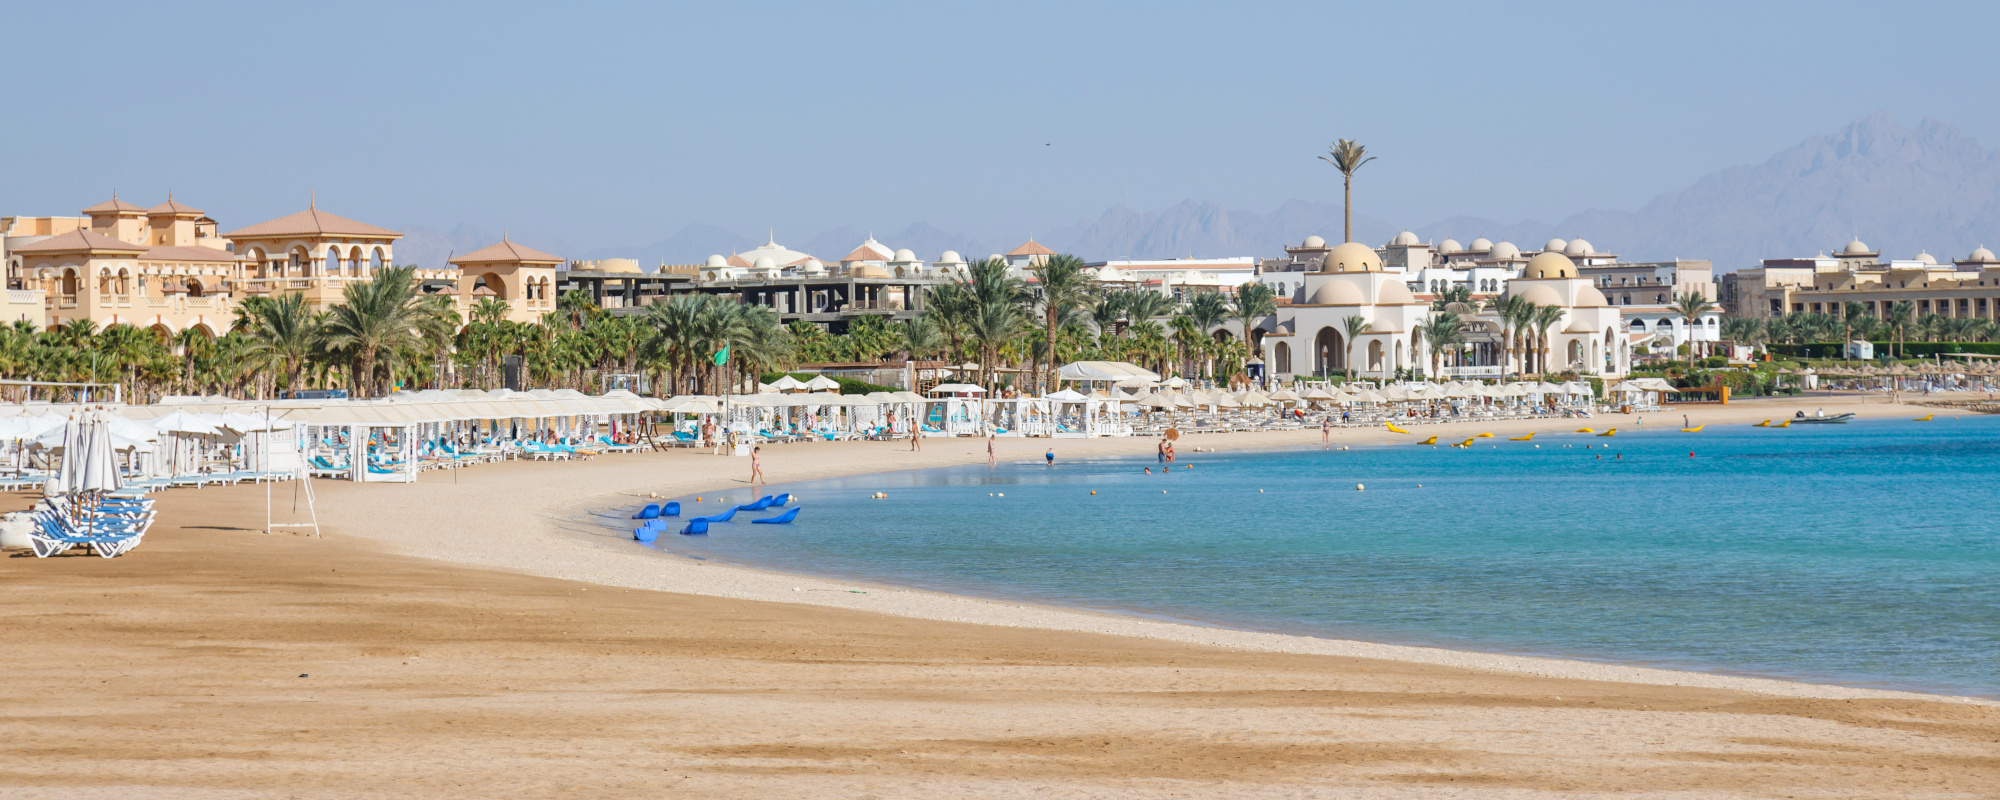 Ägypten - Hurghada Strand